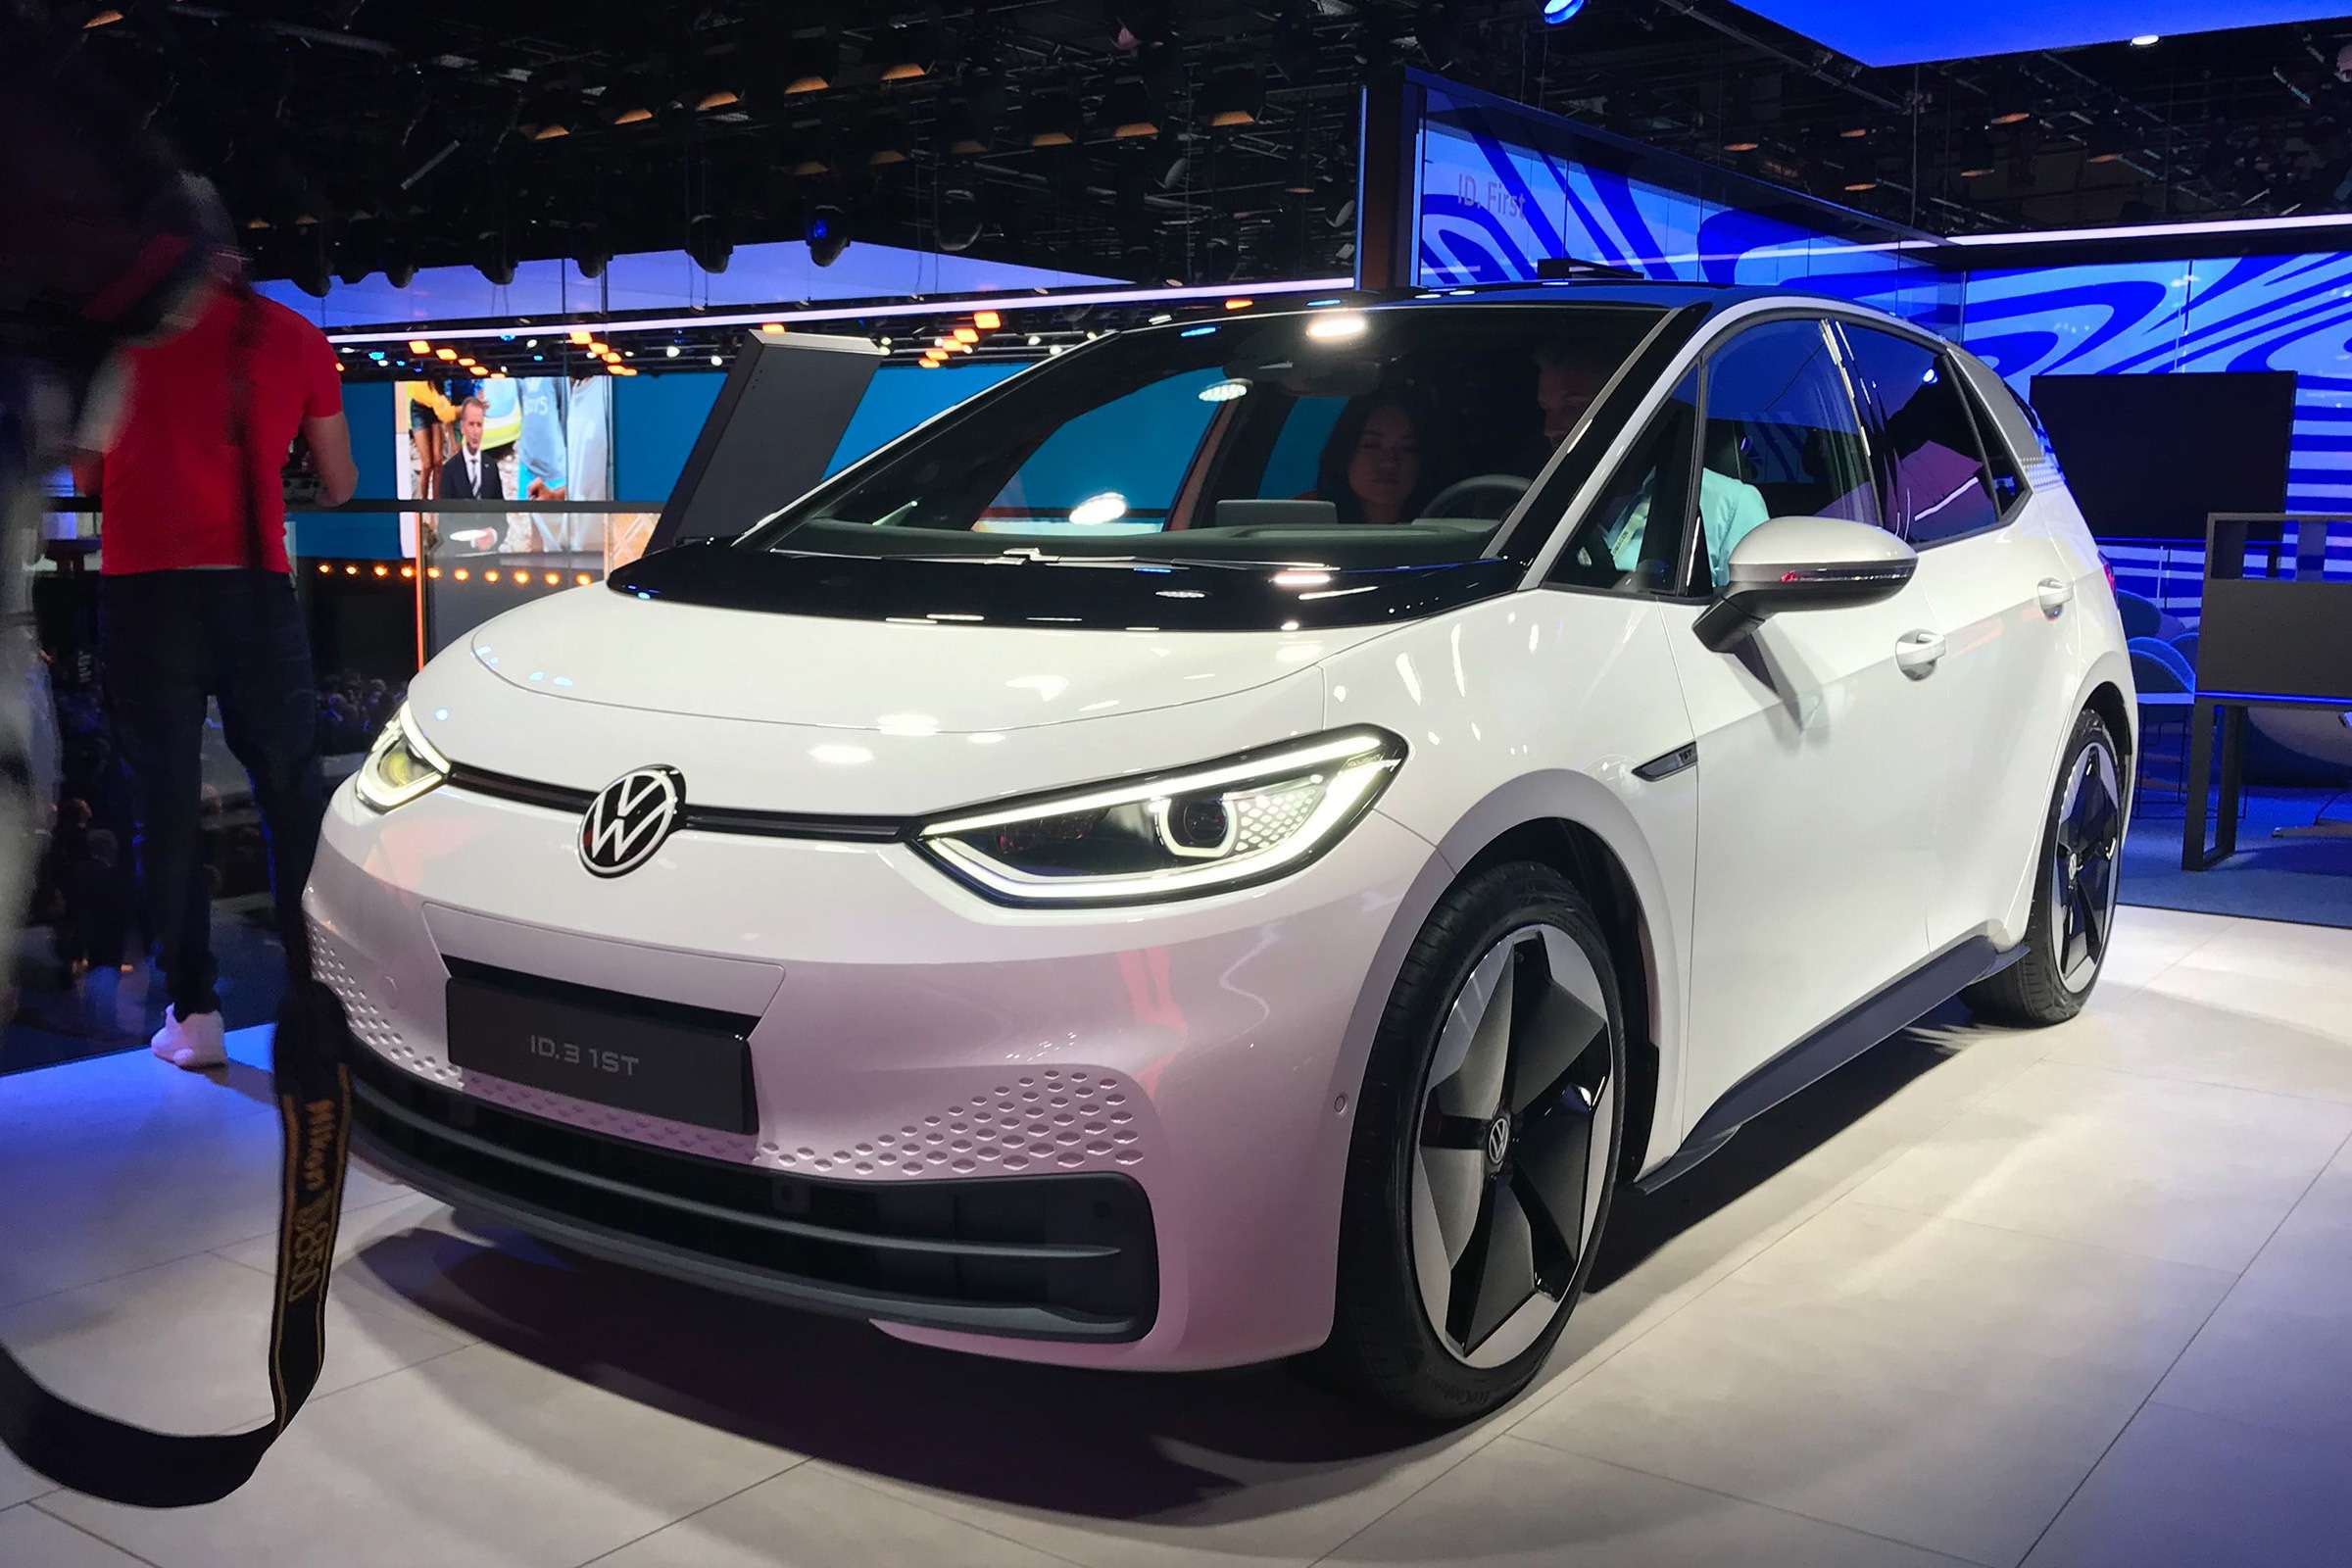 Taboola Ad Example 40910 - New 2020 Volkswagen ID.3: Electric Car Arrives At Frankfurt